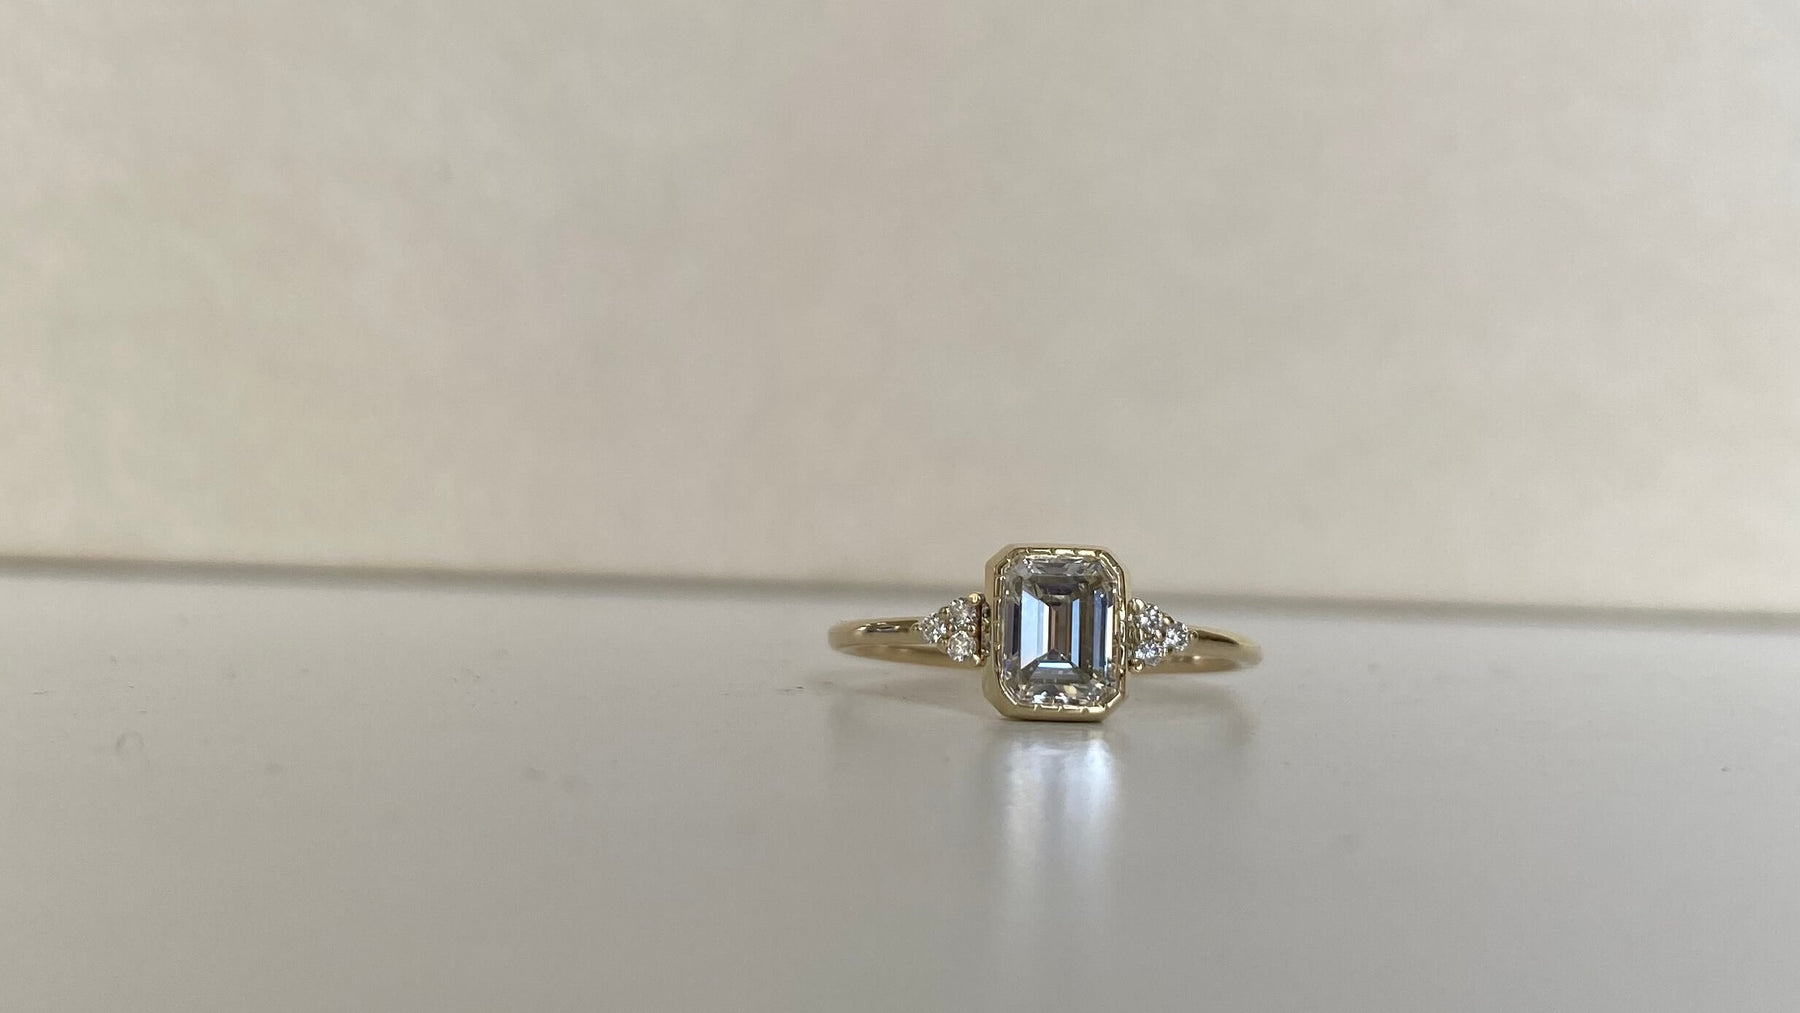 14k yellow gold custom engagement ring with princess cut white diamond center stone and white diamond side stones